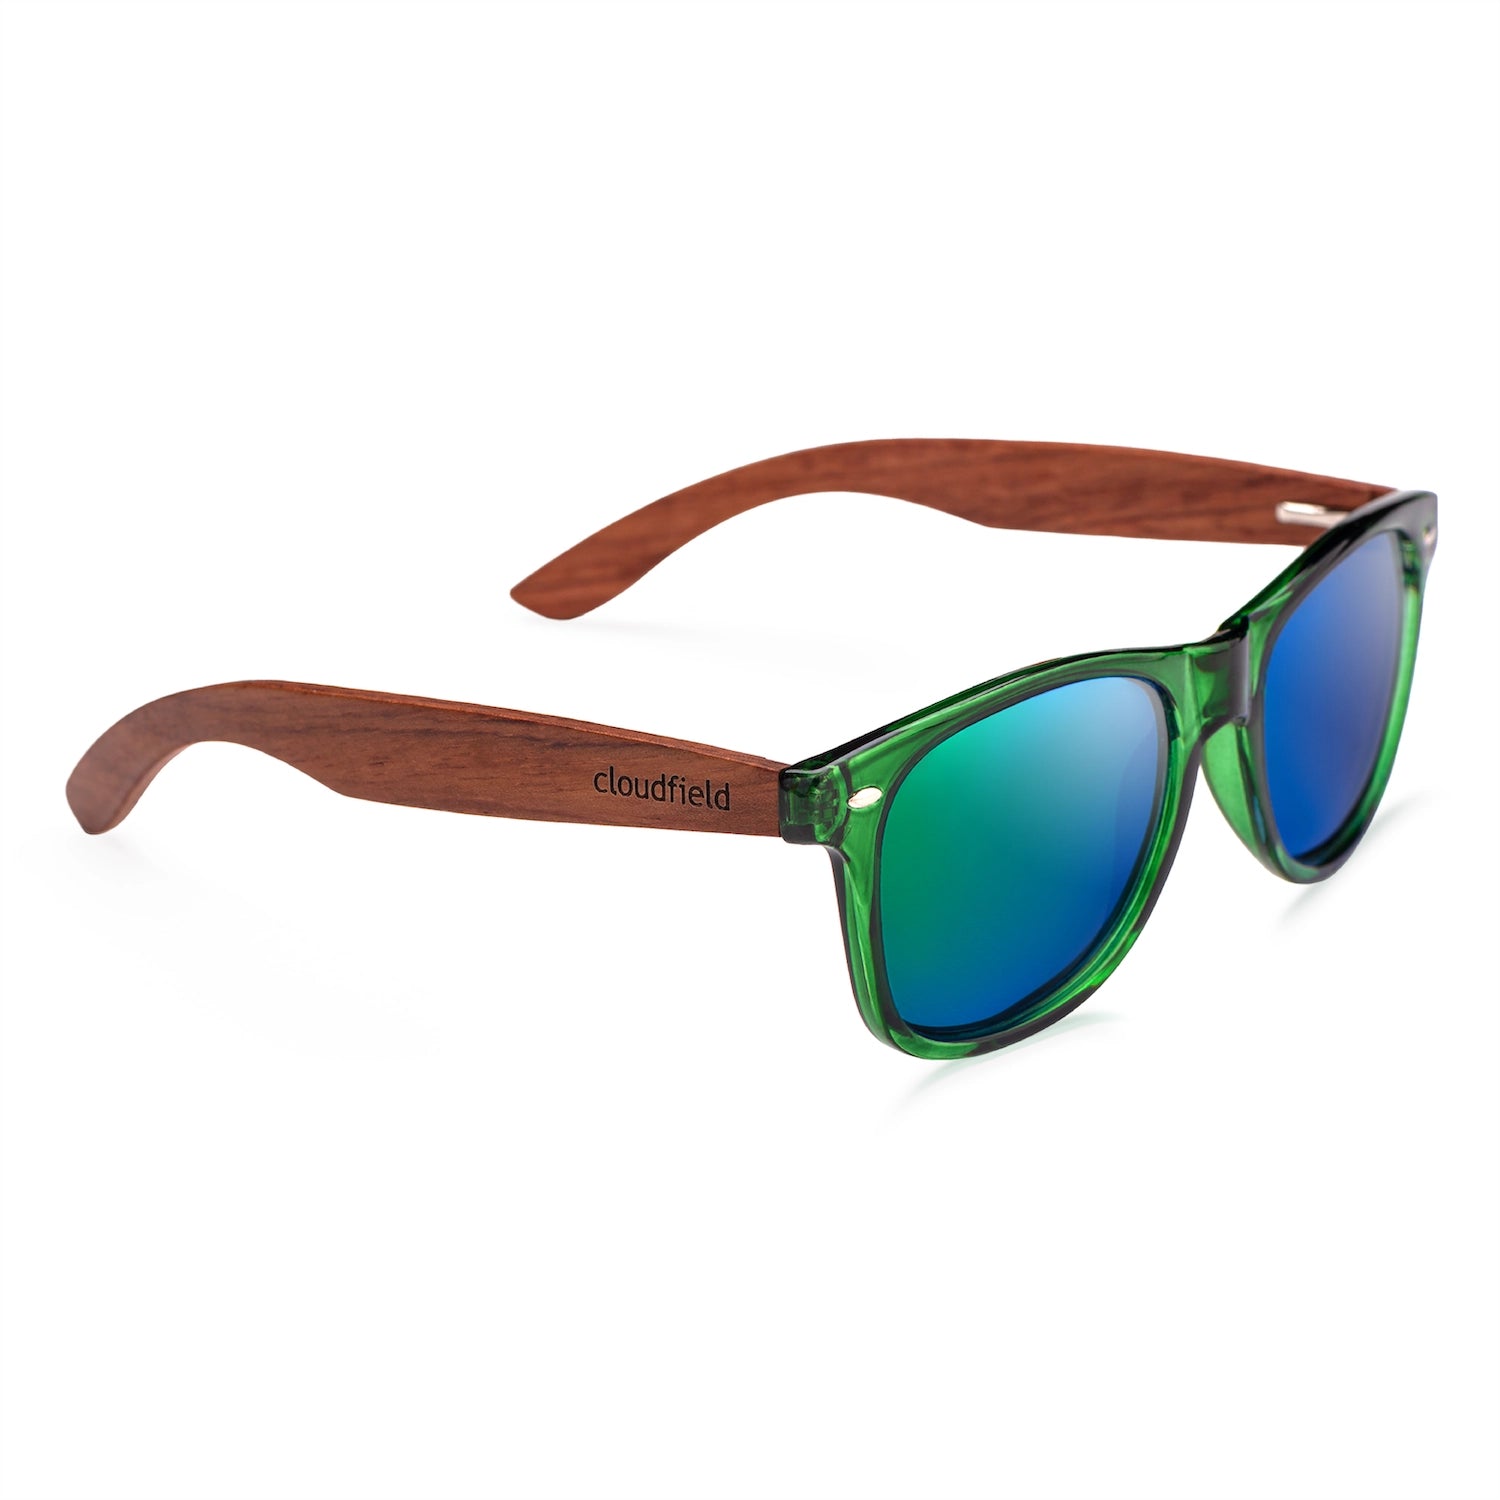 cloudfield blue green polarized sunglasses